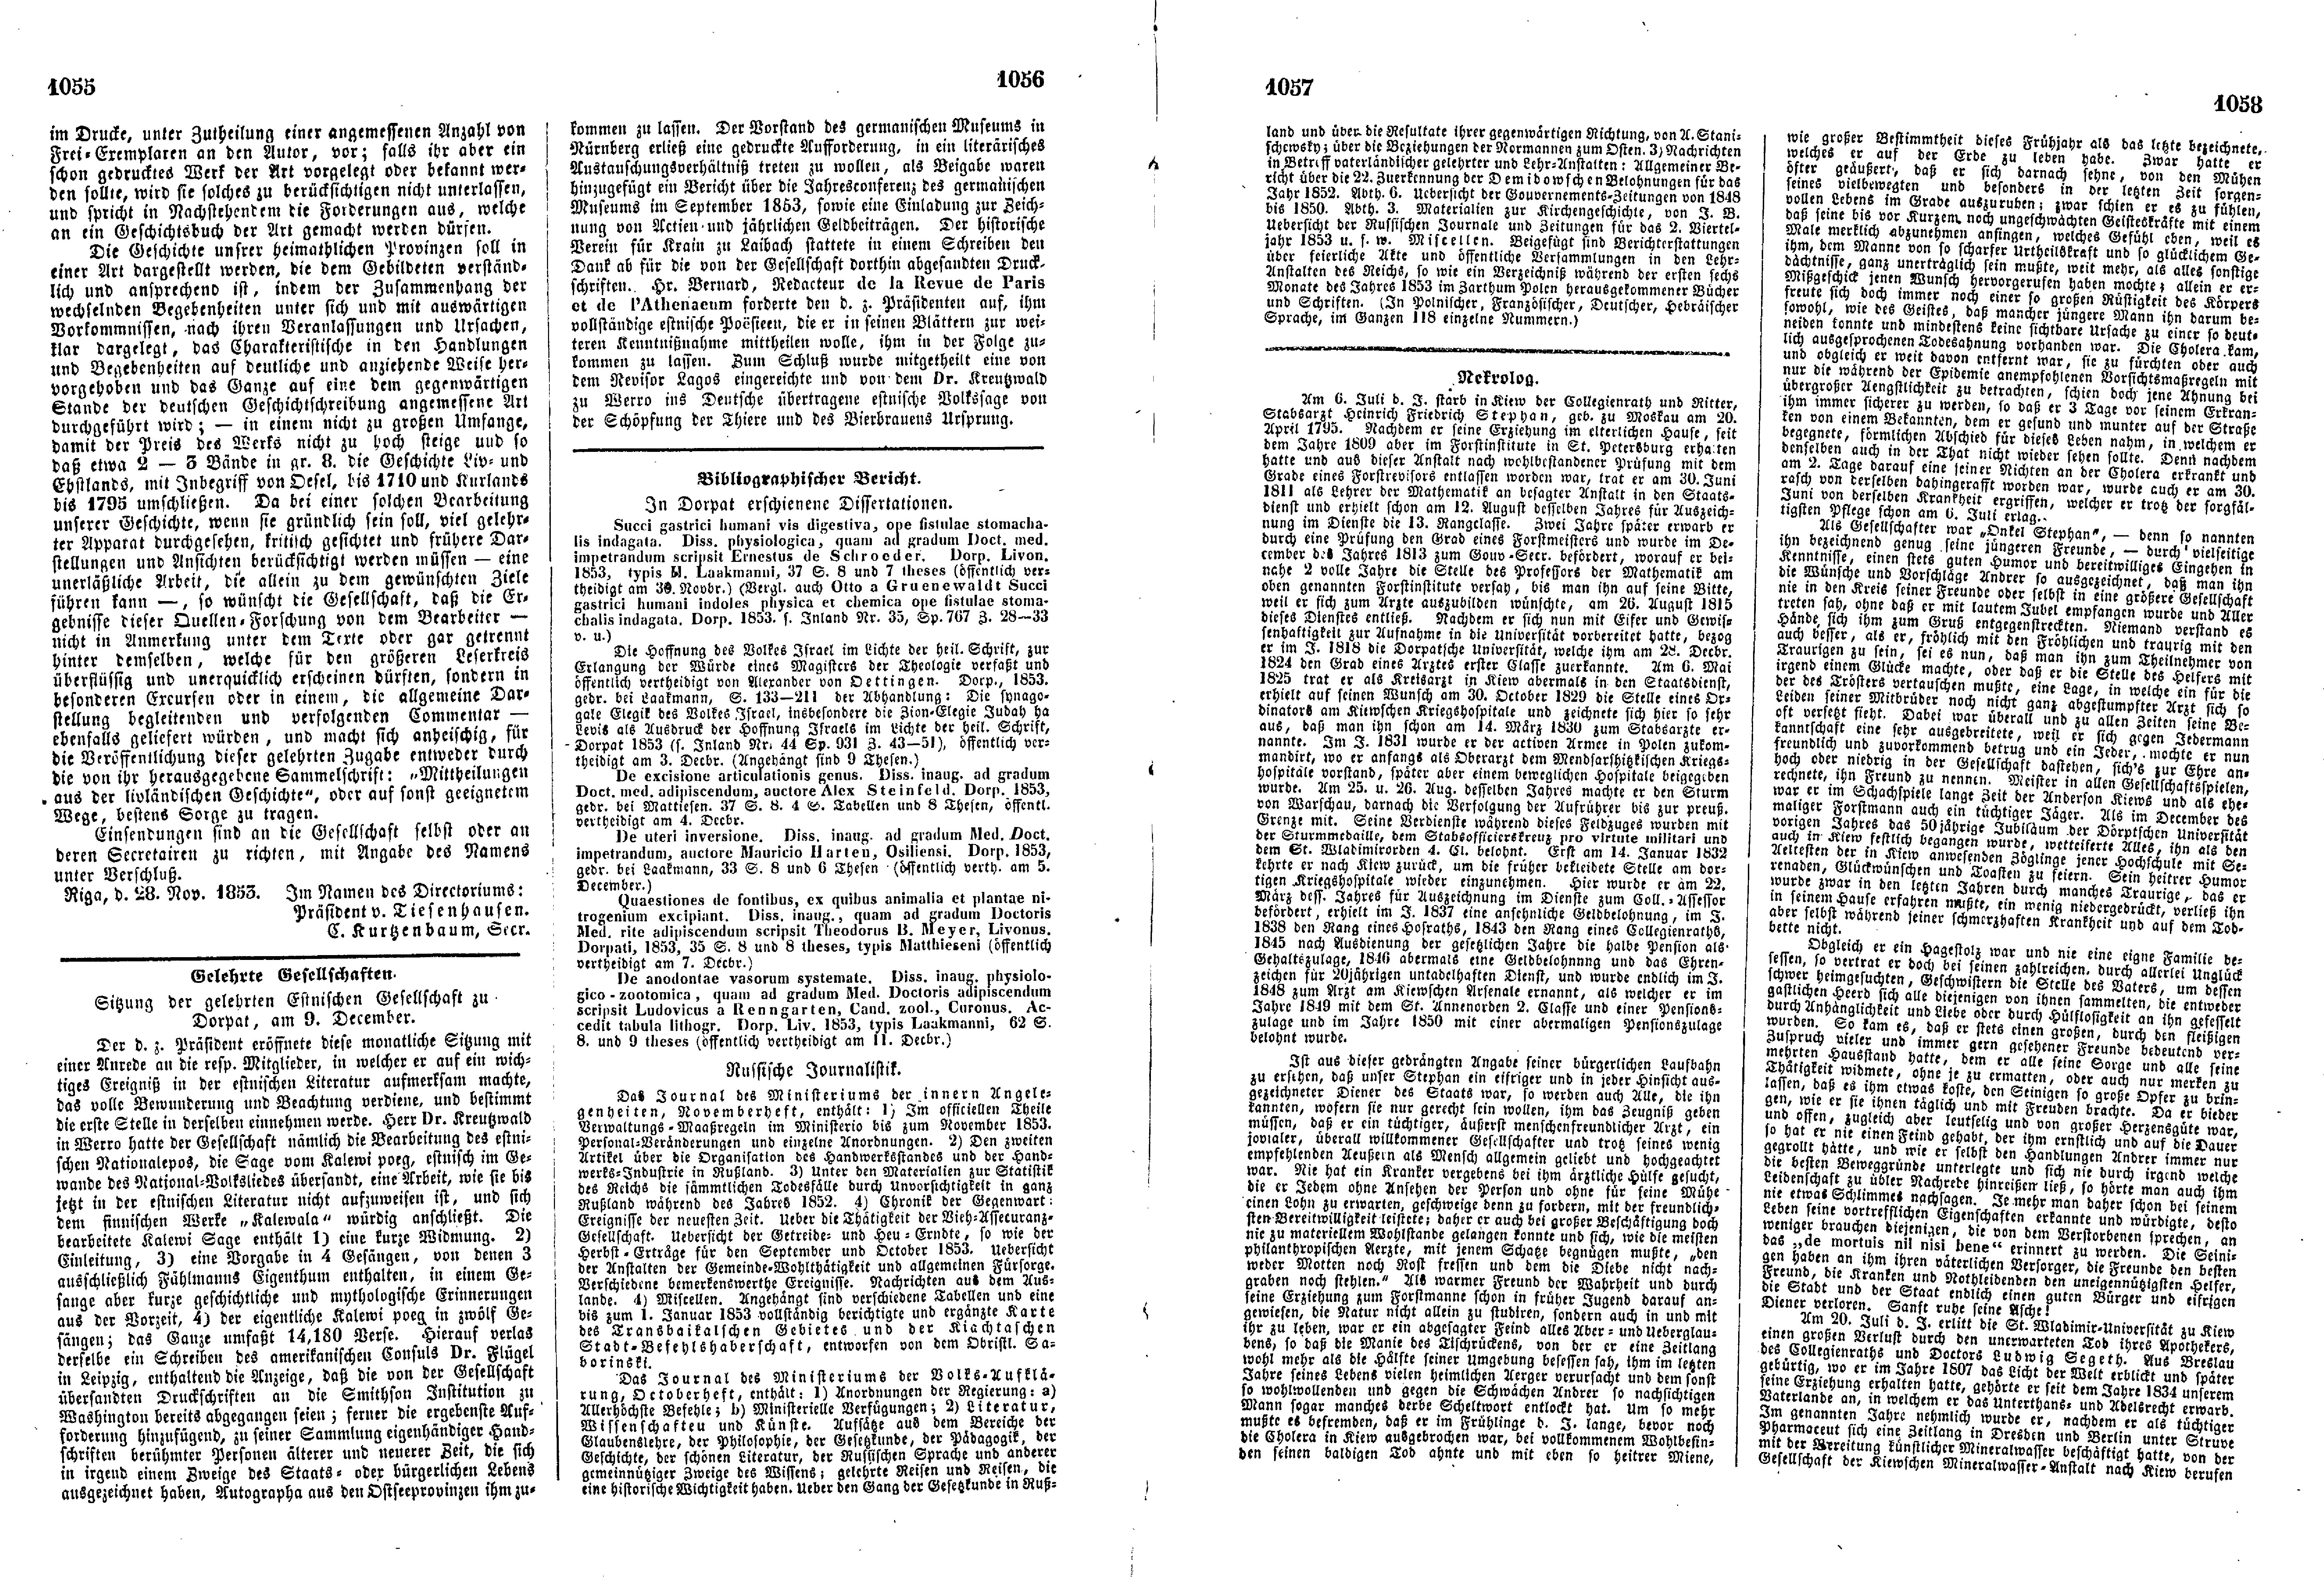 Das Inland [18] (1853) | 274. (1055-1058) Main body of text